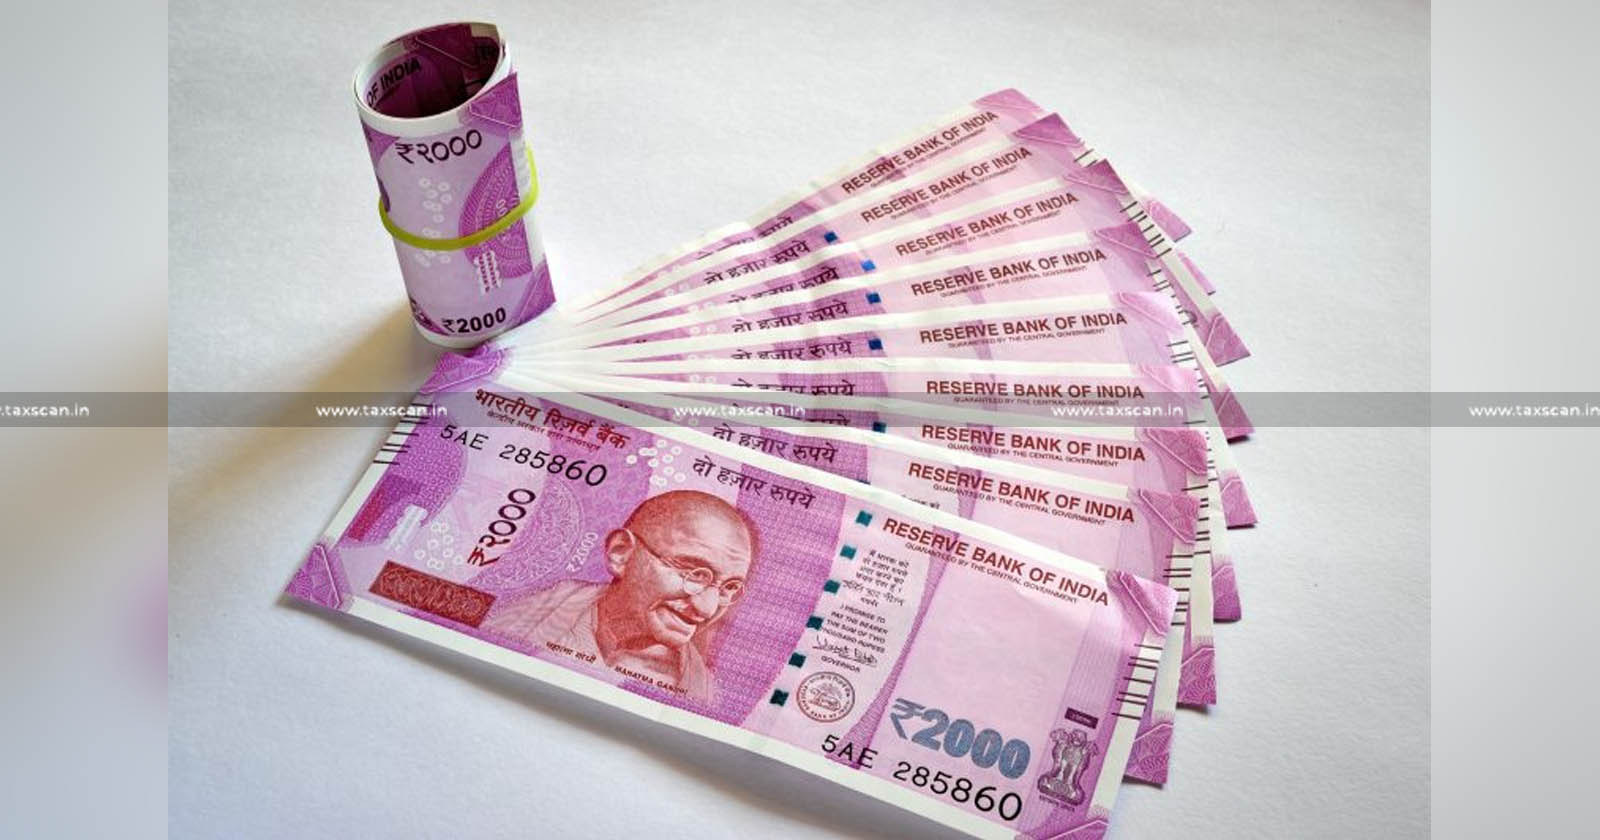 Supreme Court - Supreme Court Refuses Urgent Listing - Exchange of Rs. 2000 notes - Plea Challenging Exchange - bank - taxscan